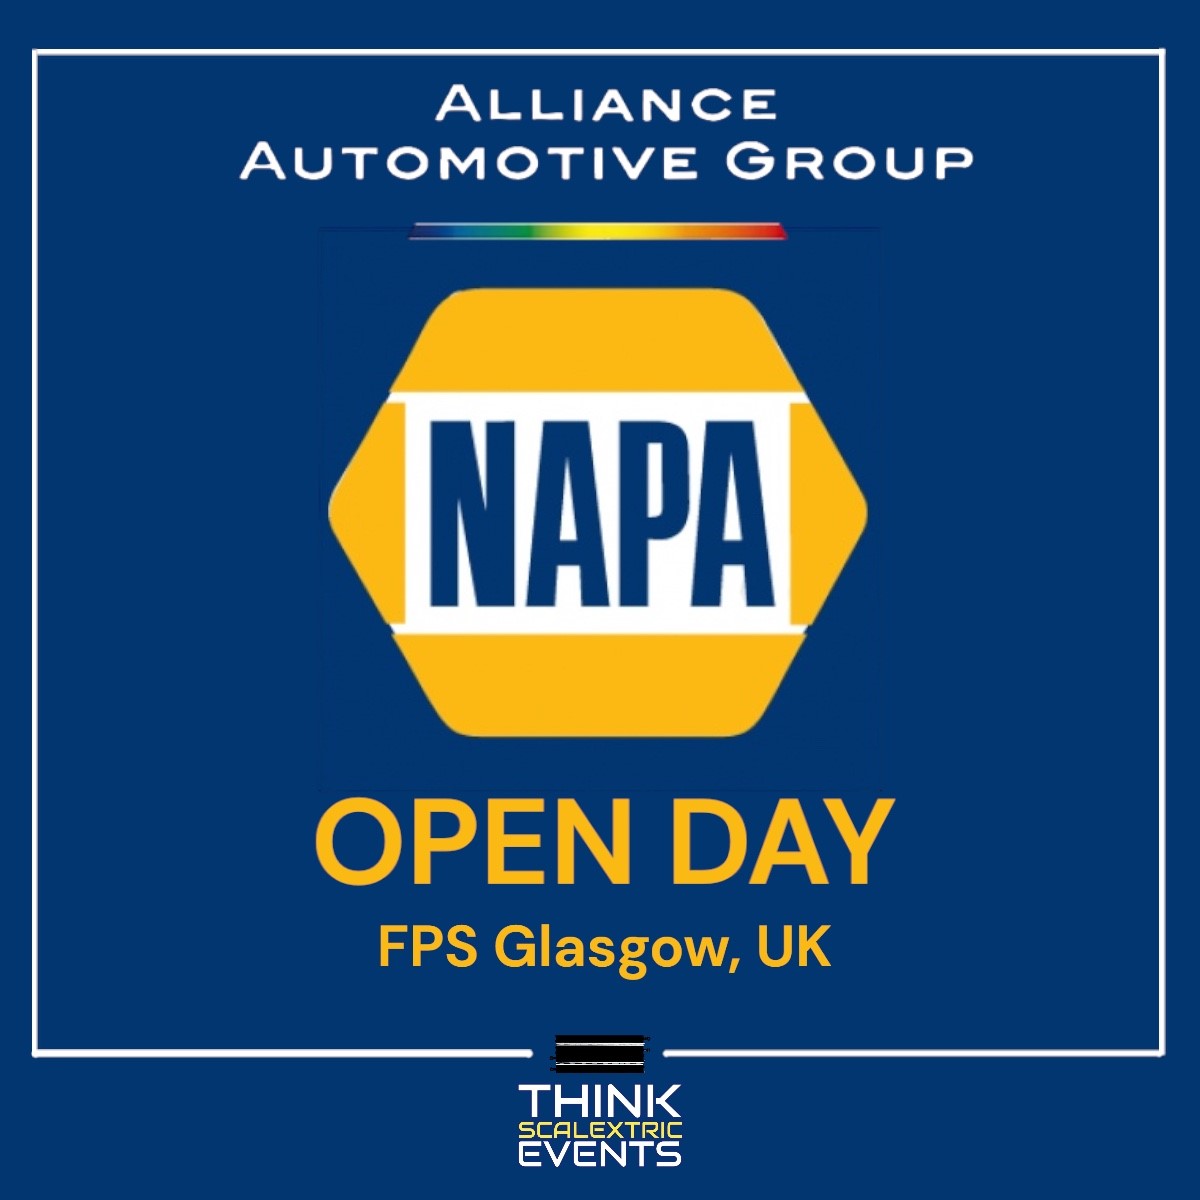 Napa UK Open Days FPS UK Distribution Alliance Automotive Group